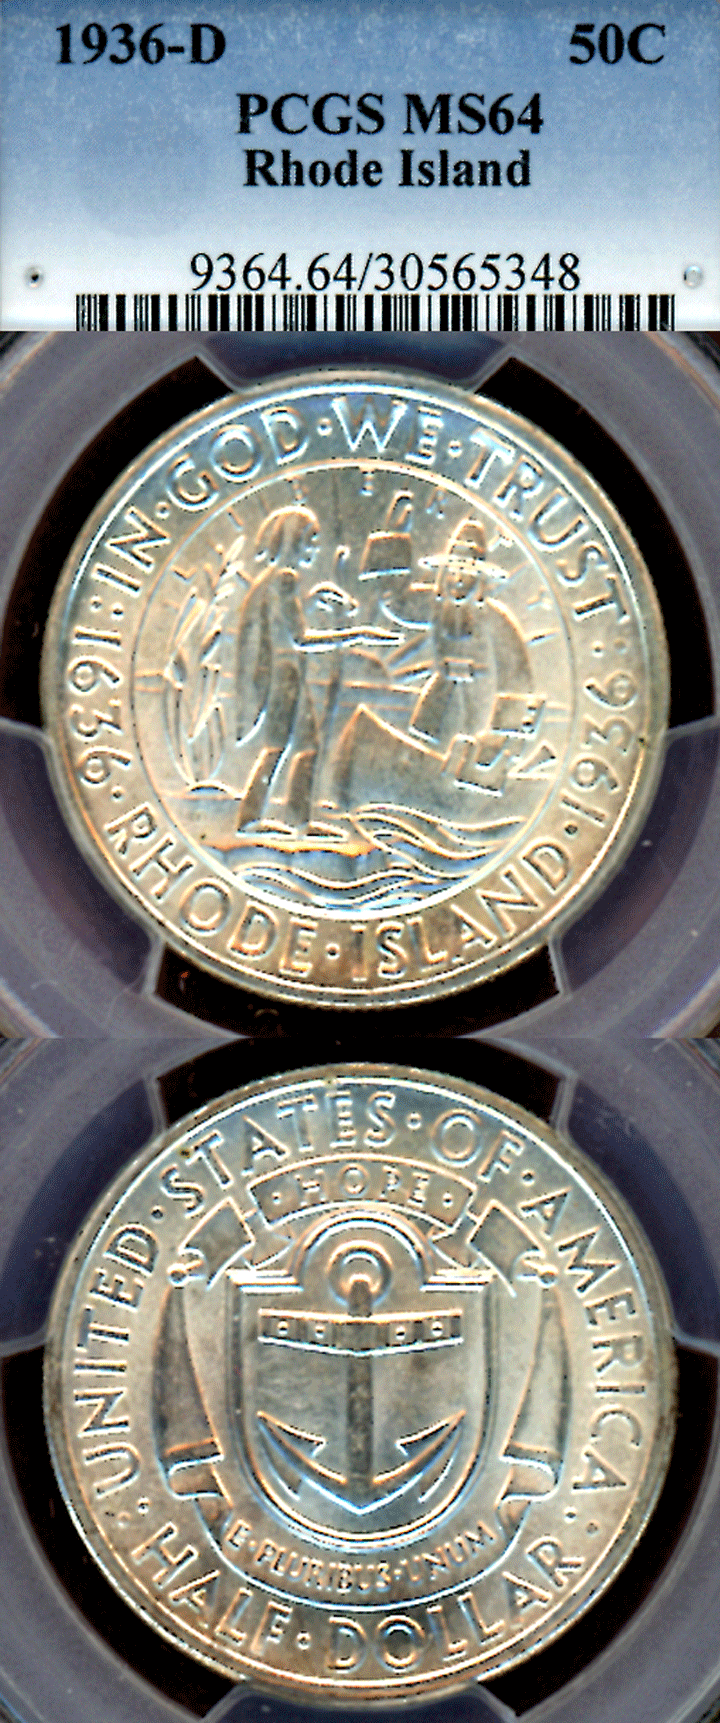 1936-D Rhode Island Commemorative half dollar PCGS MS-64